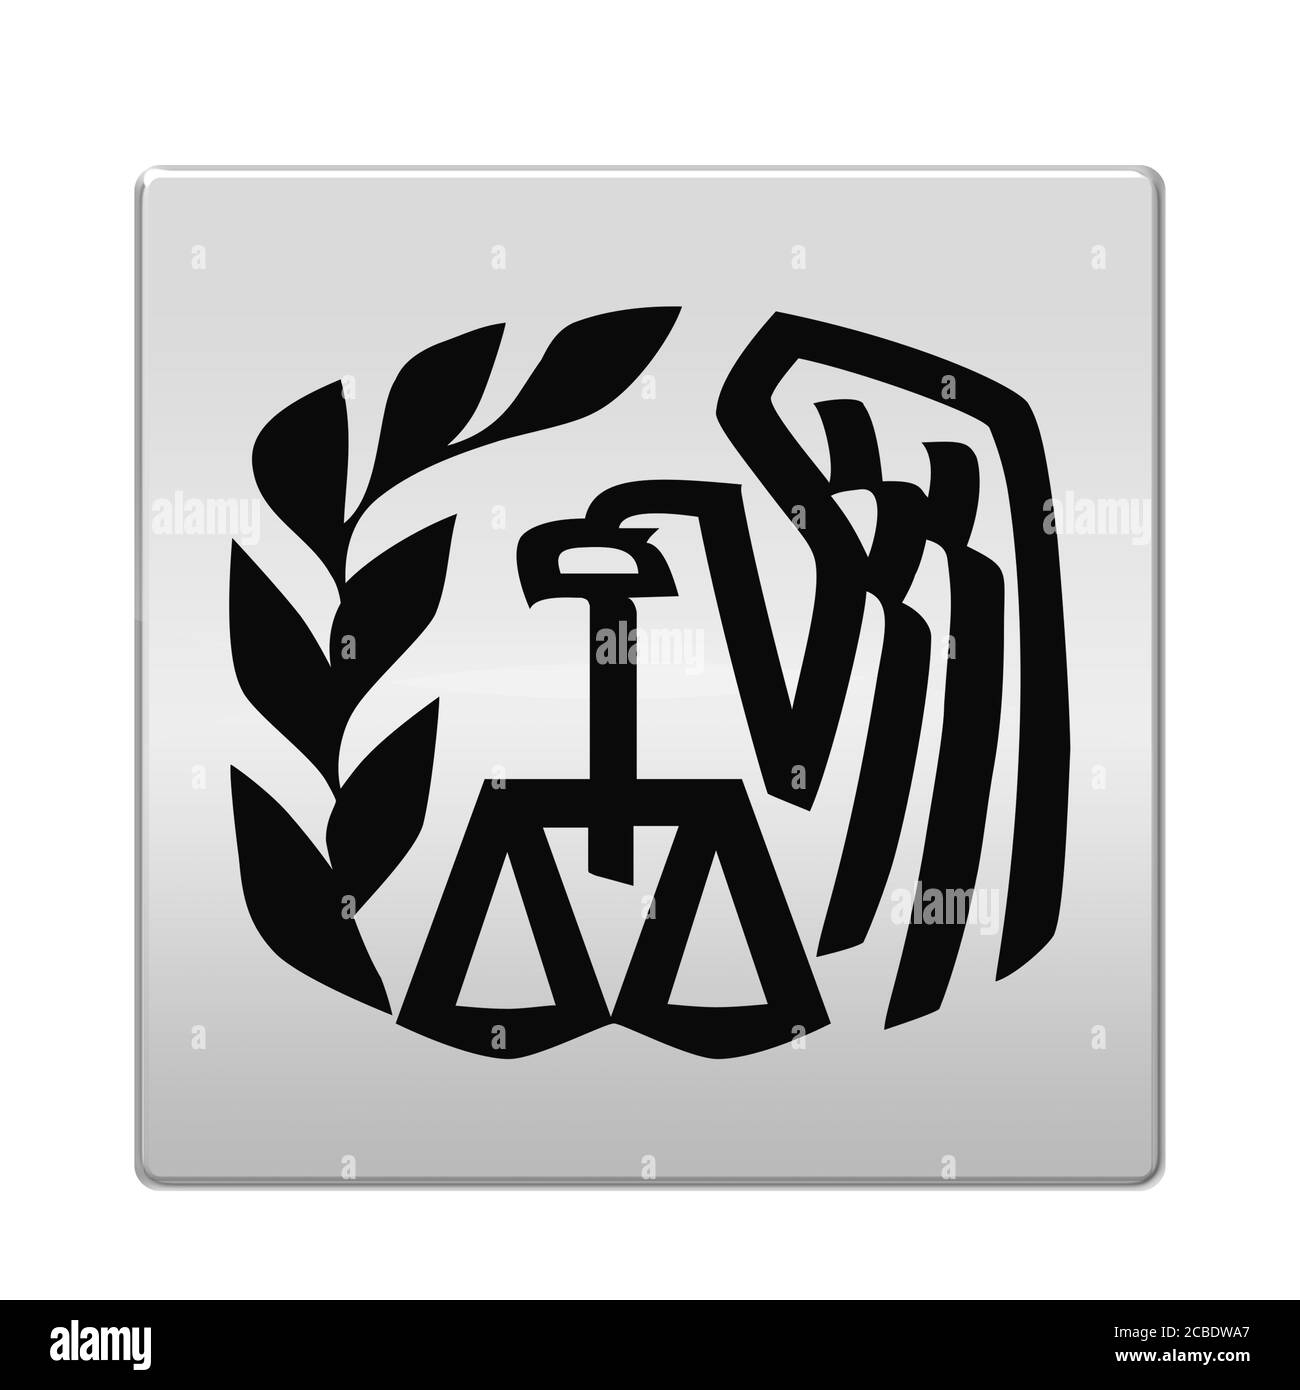 IRS-Symbol für Internal Revenue Service Stockfoto